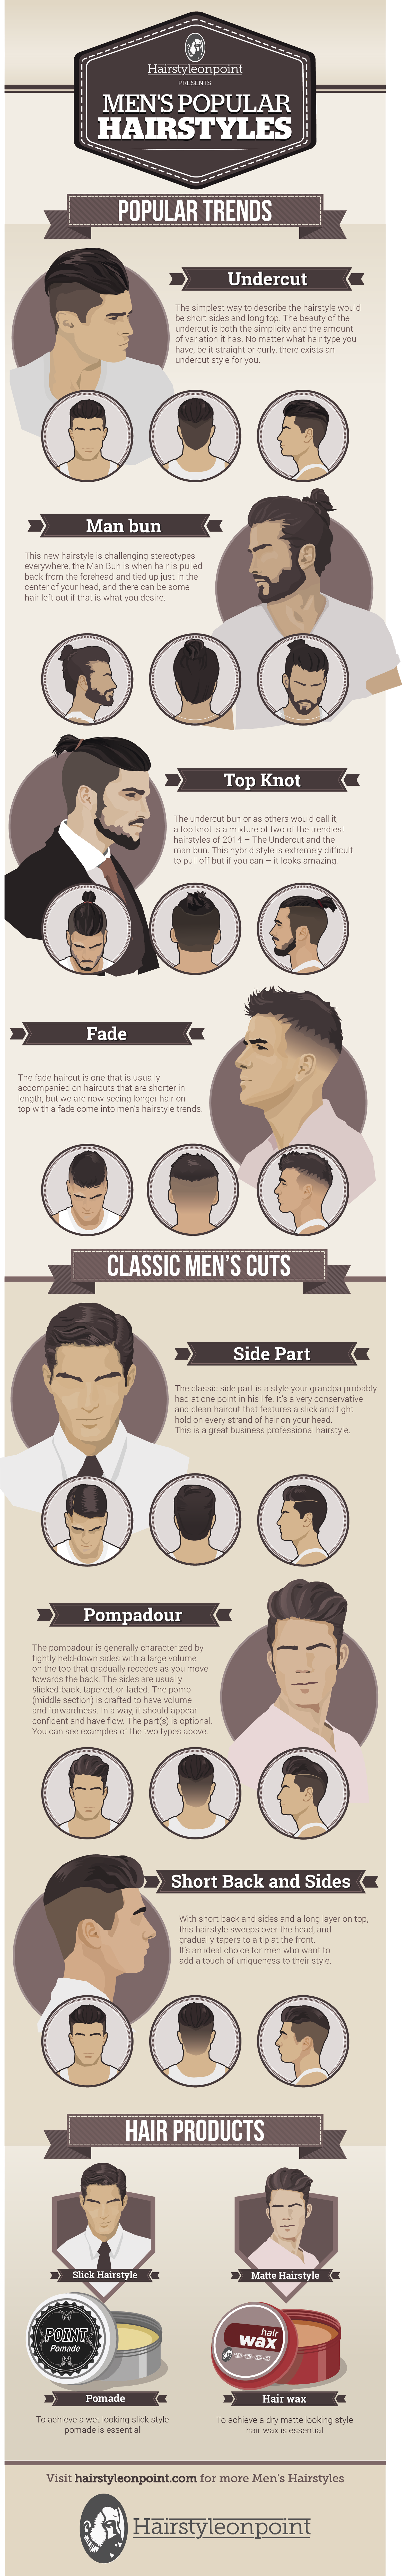 top hair styles for men